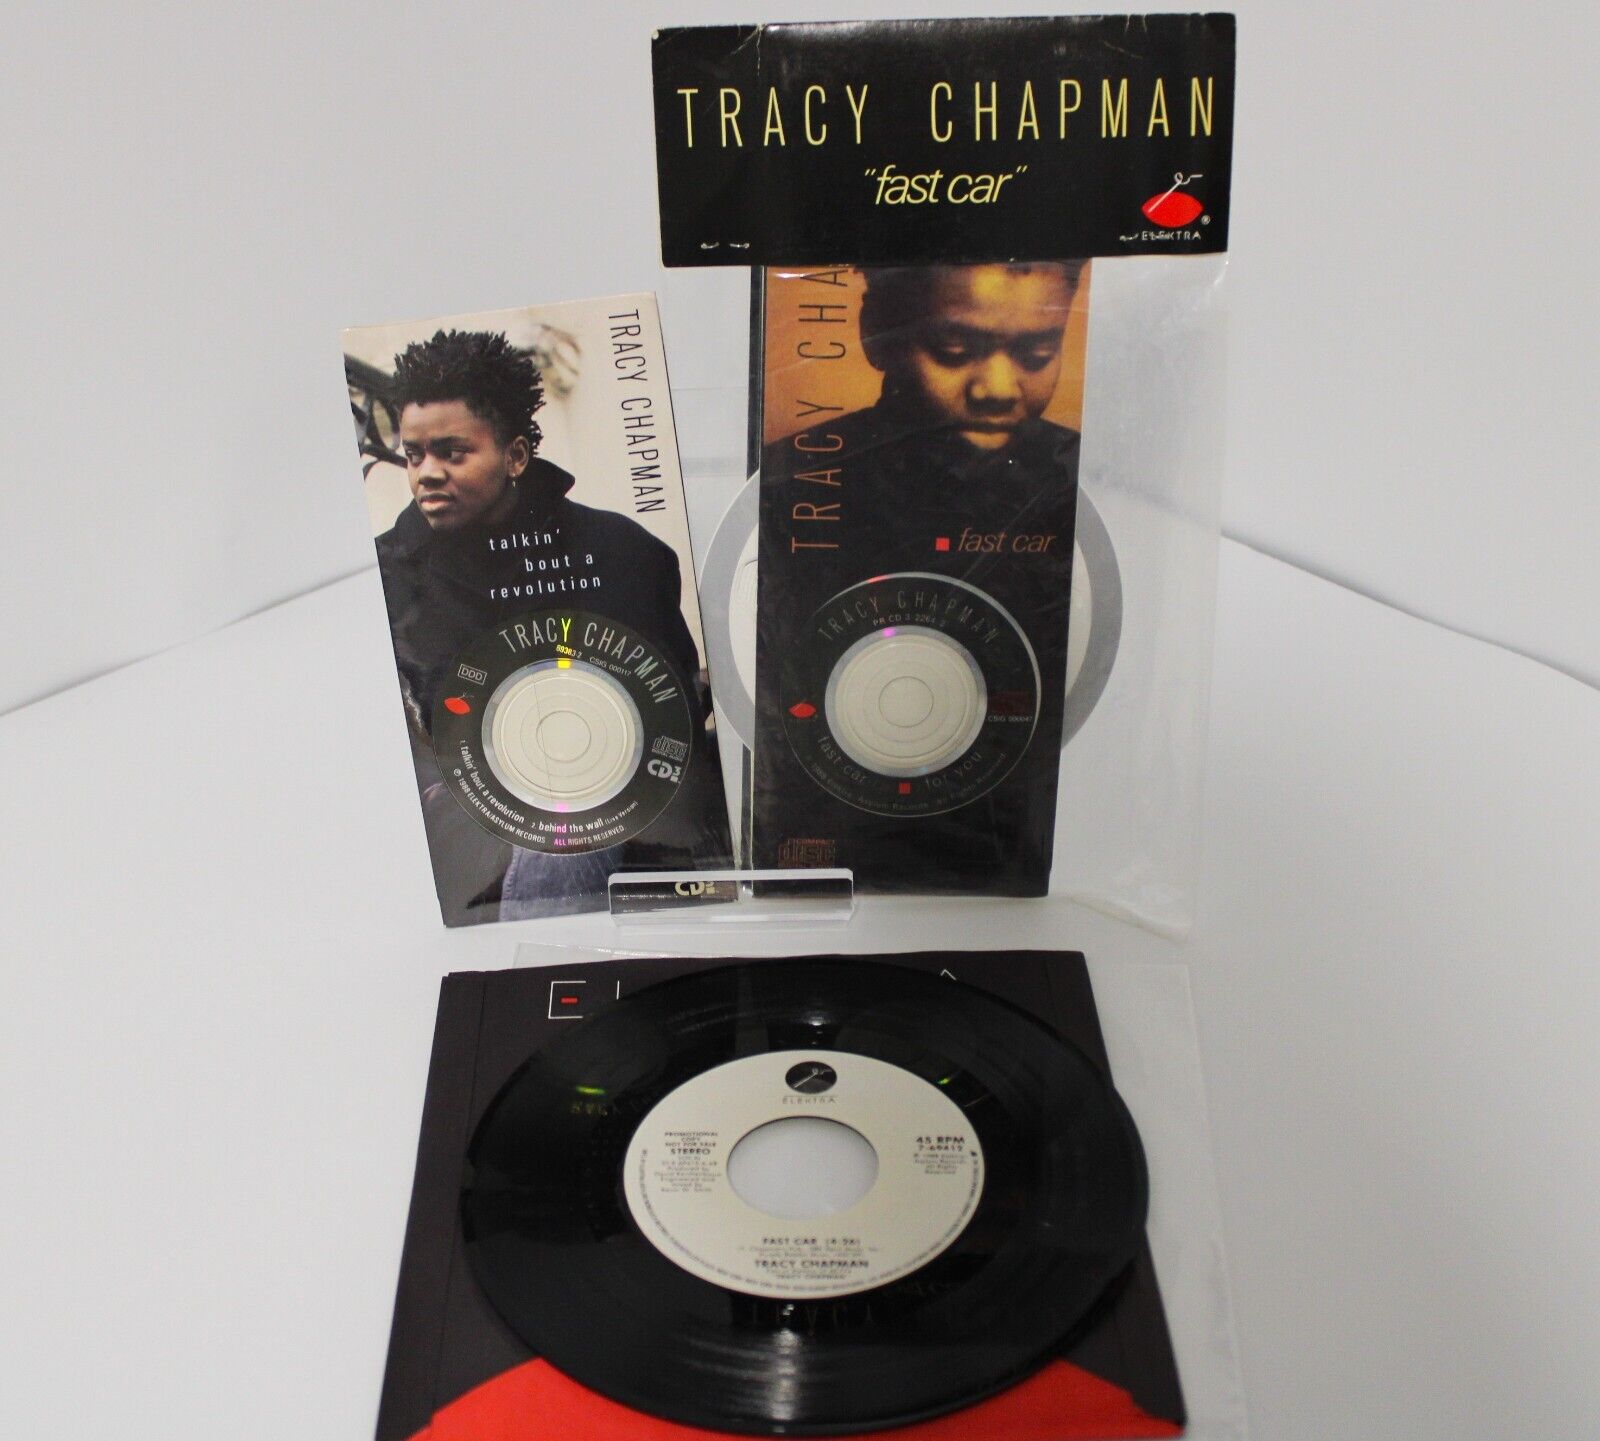 Tracy Chapman 45 Fast Car PROMO+2 single CDs Fast Car &Talkin About a Revolution